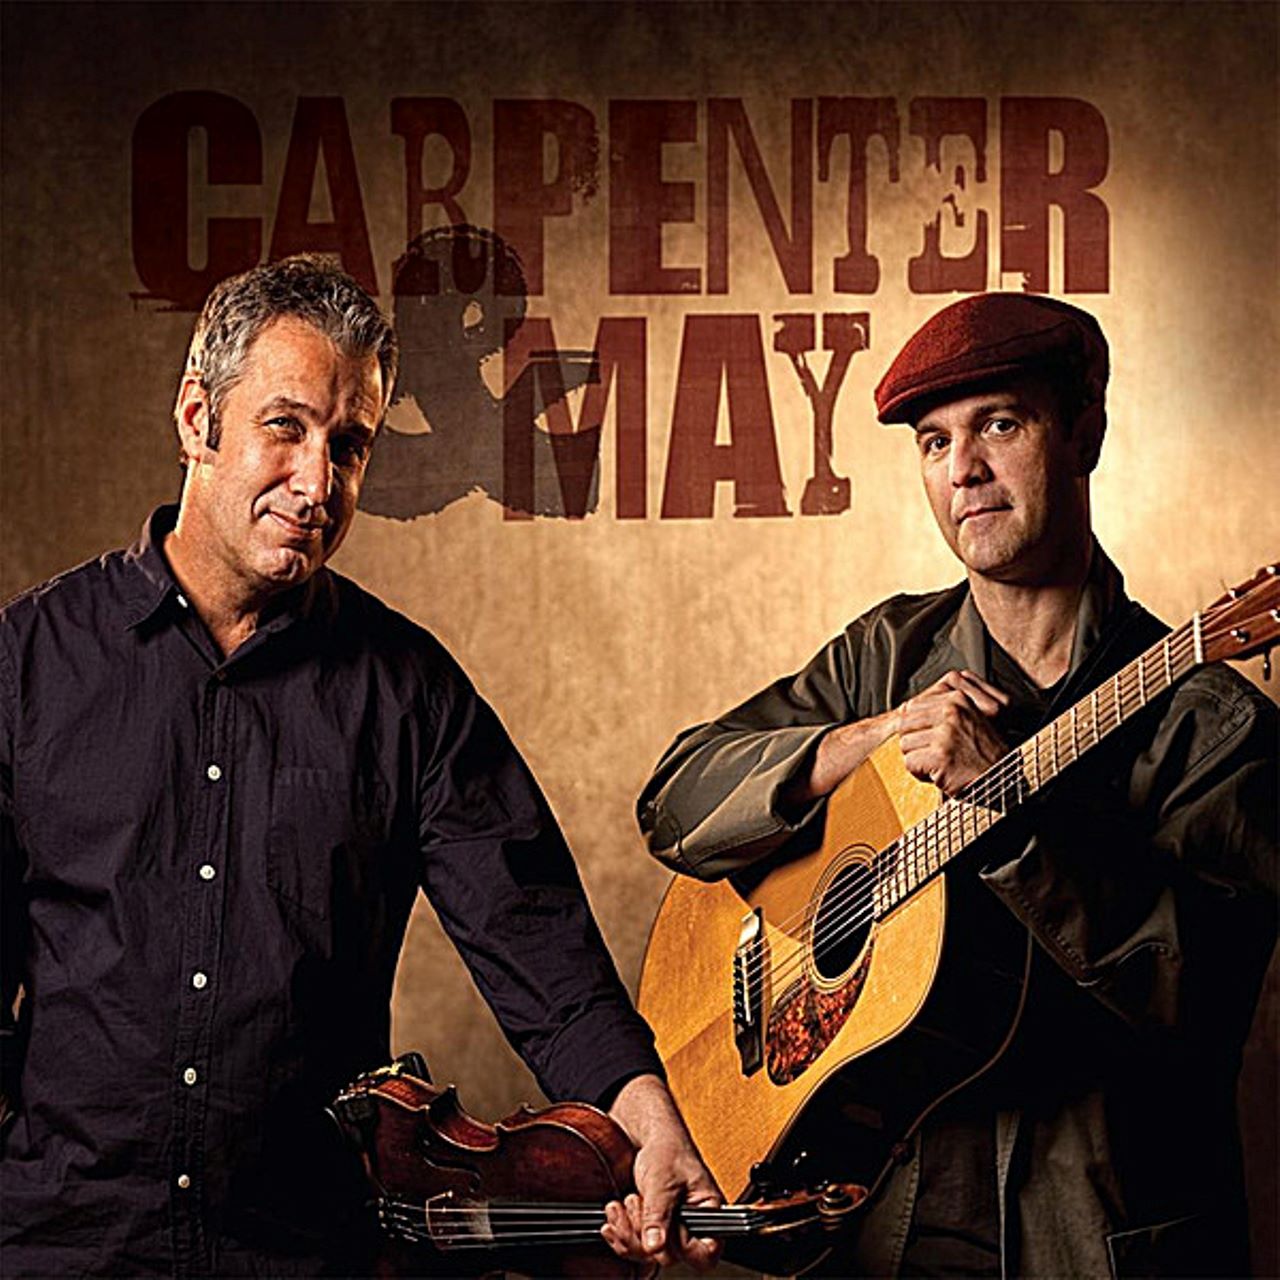 Carpenter & May - Carpenter & May cover album